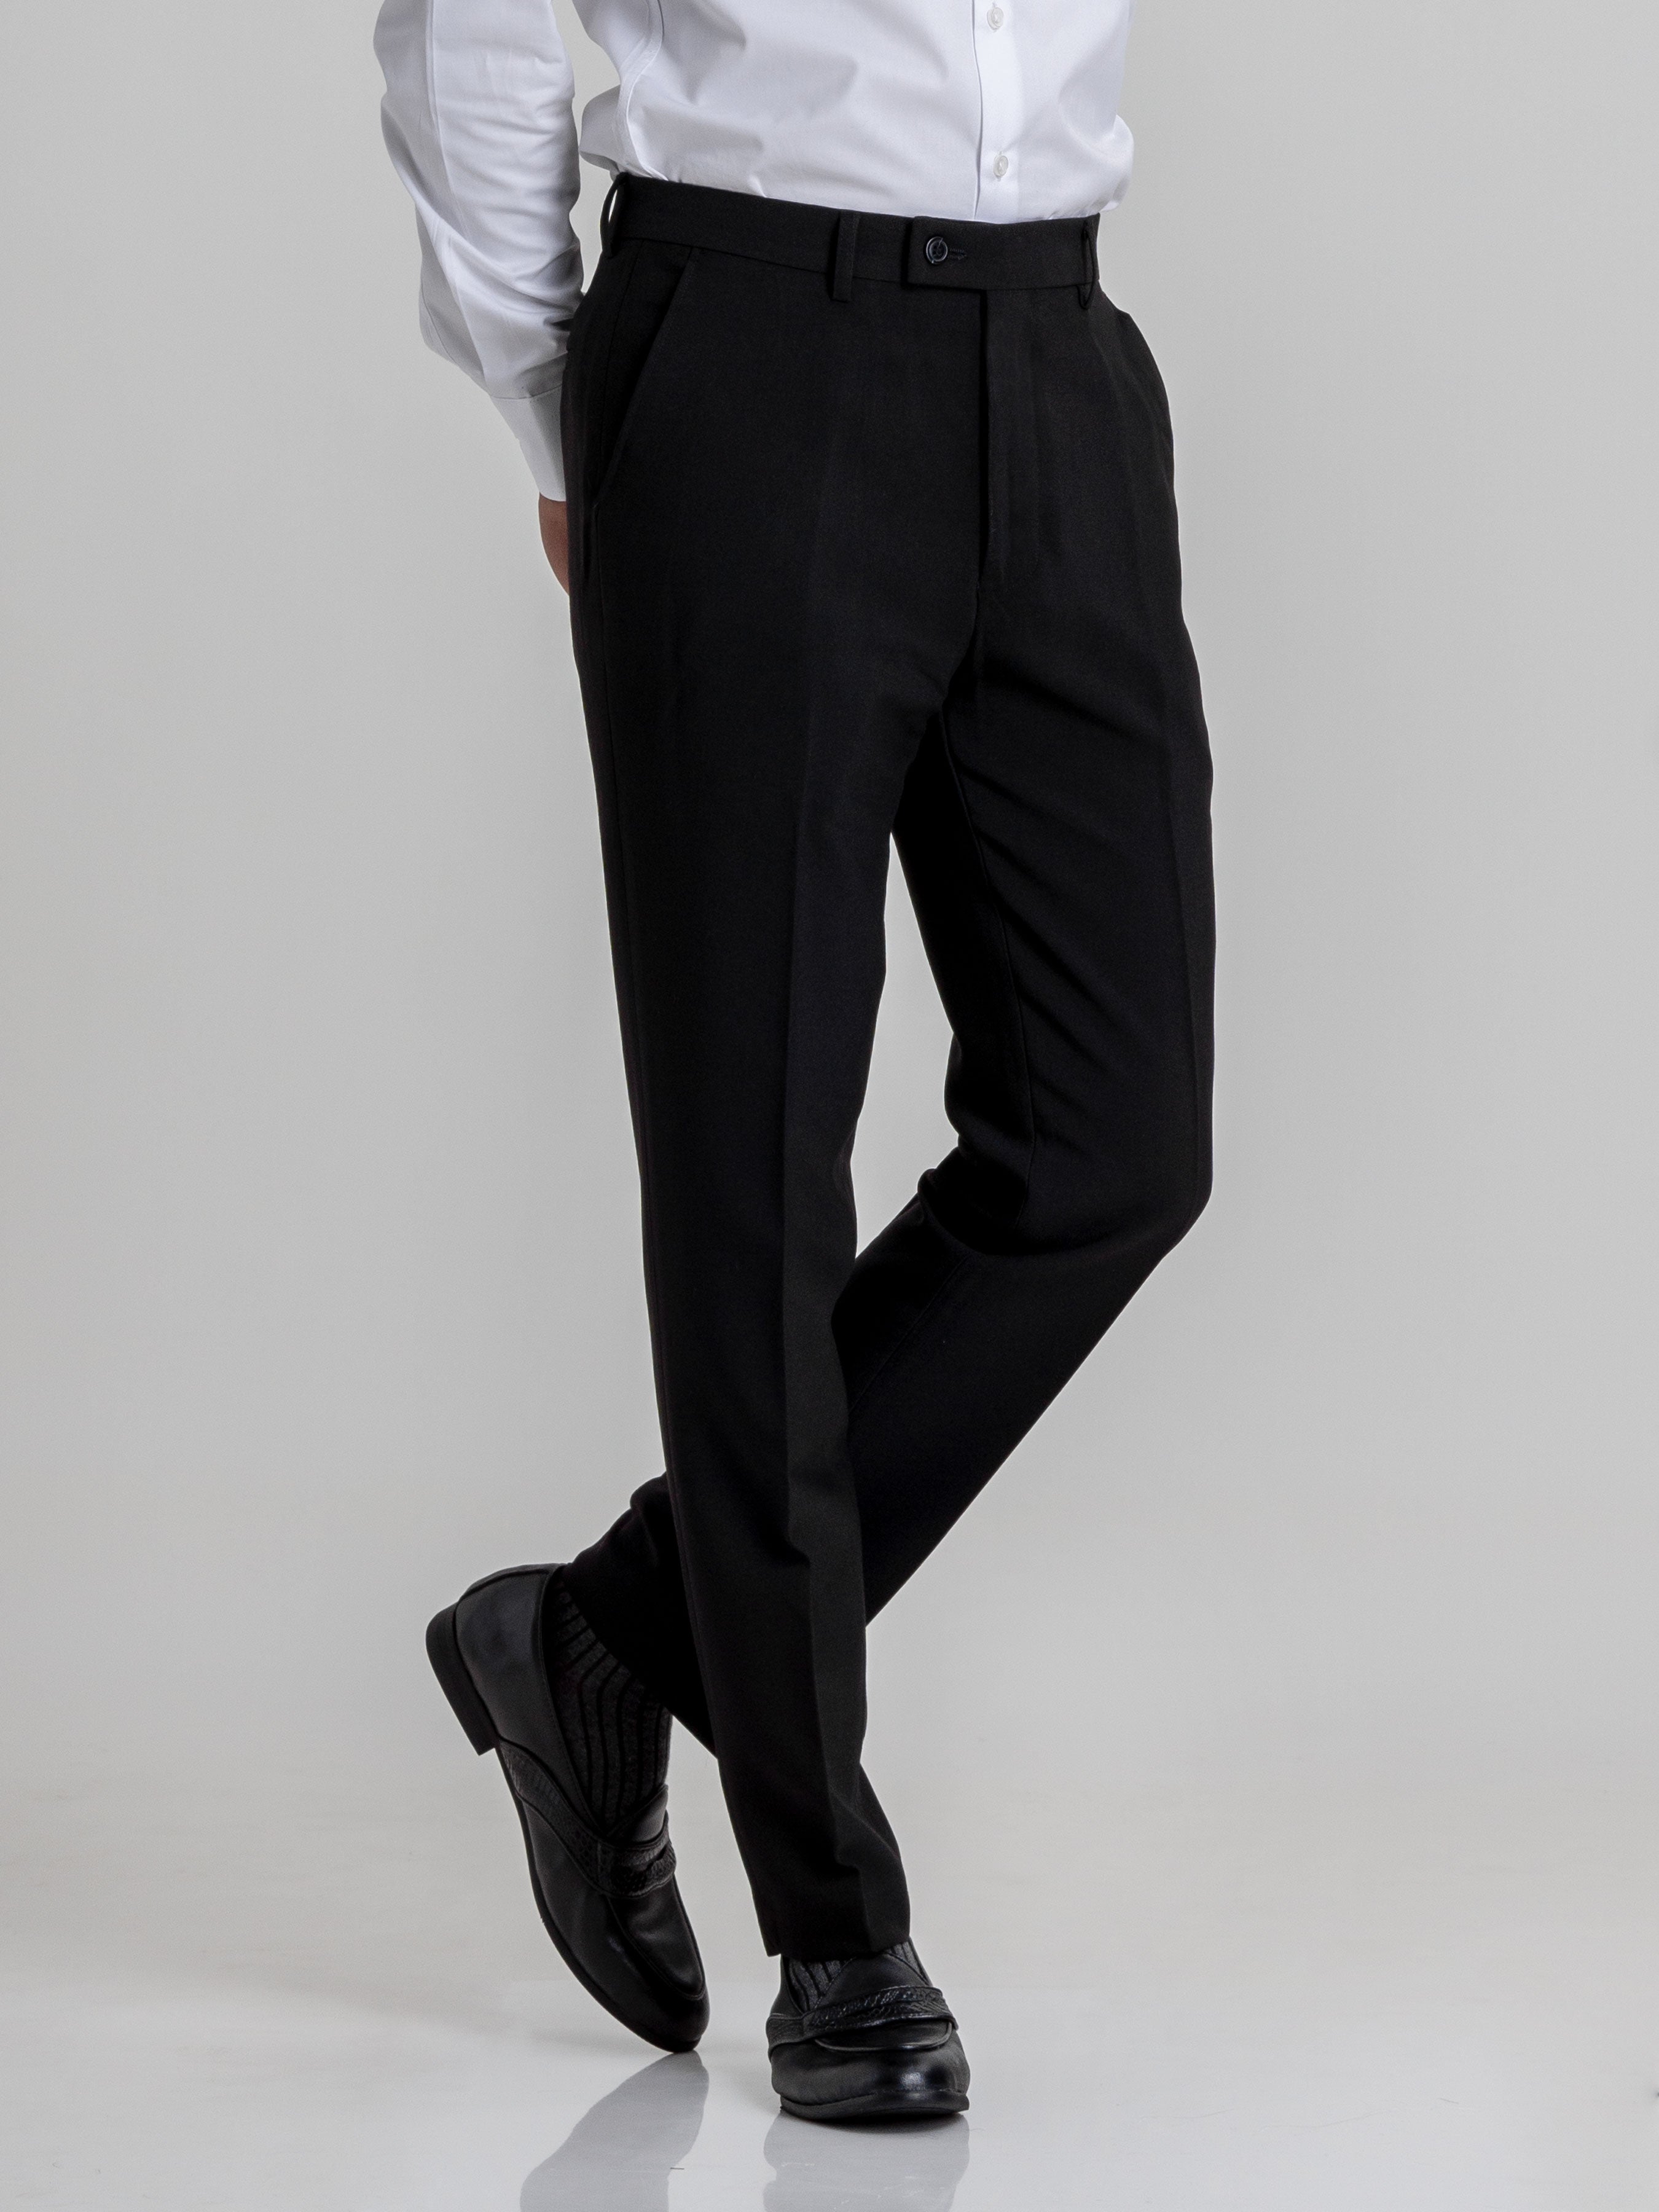 Buy Classic Work Wear Trouser With Bottom Slits For Women Online  Best  Prices in India  Uniform Bucket  UNIFORM BUCKET